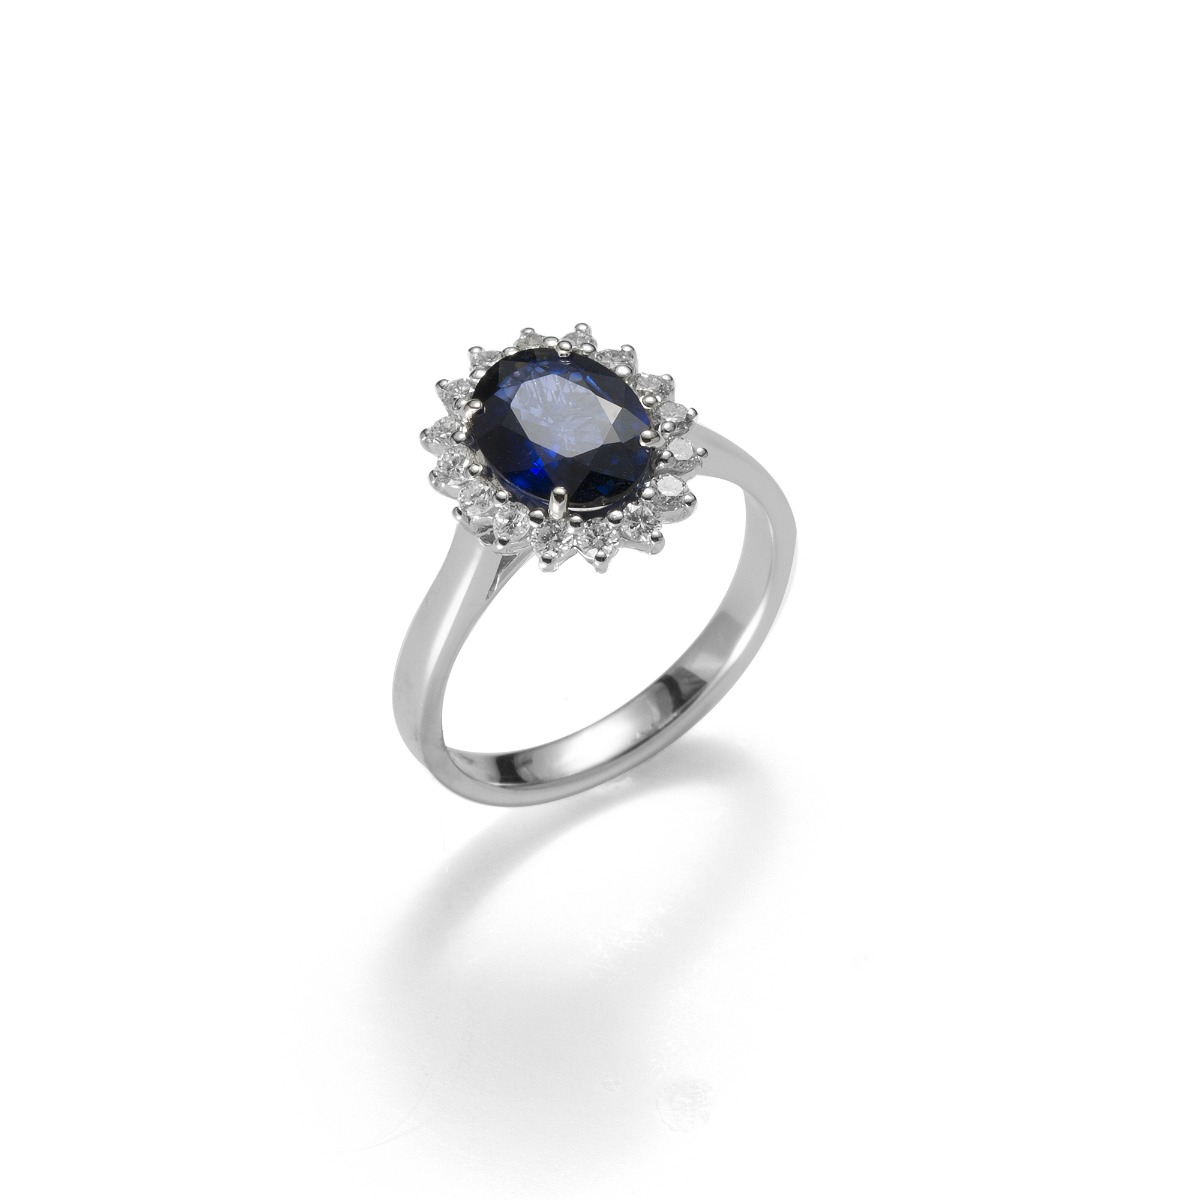 Halo Sapphire Ring